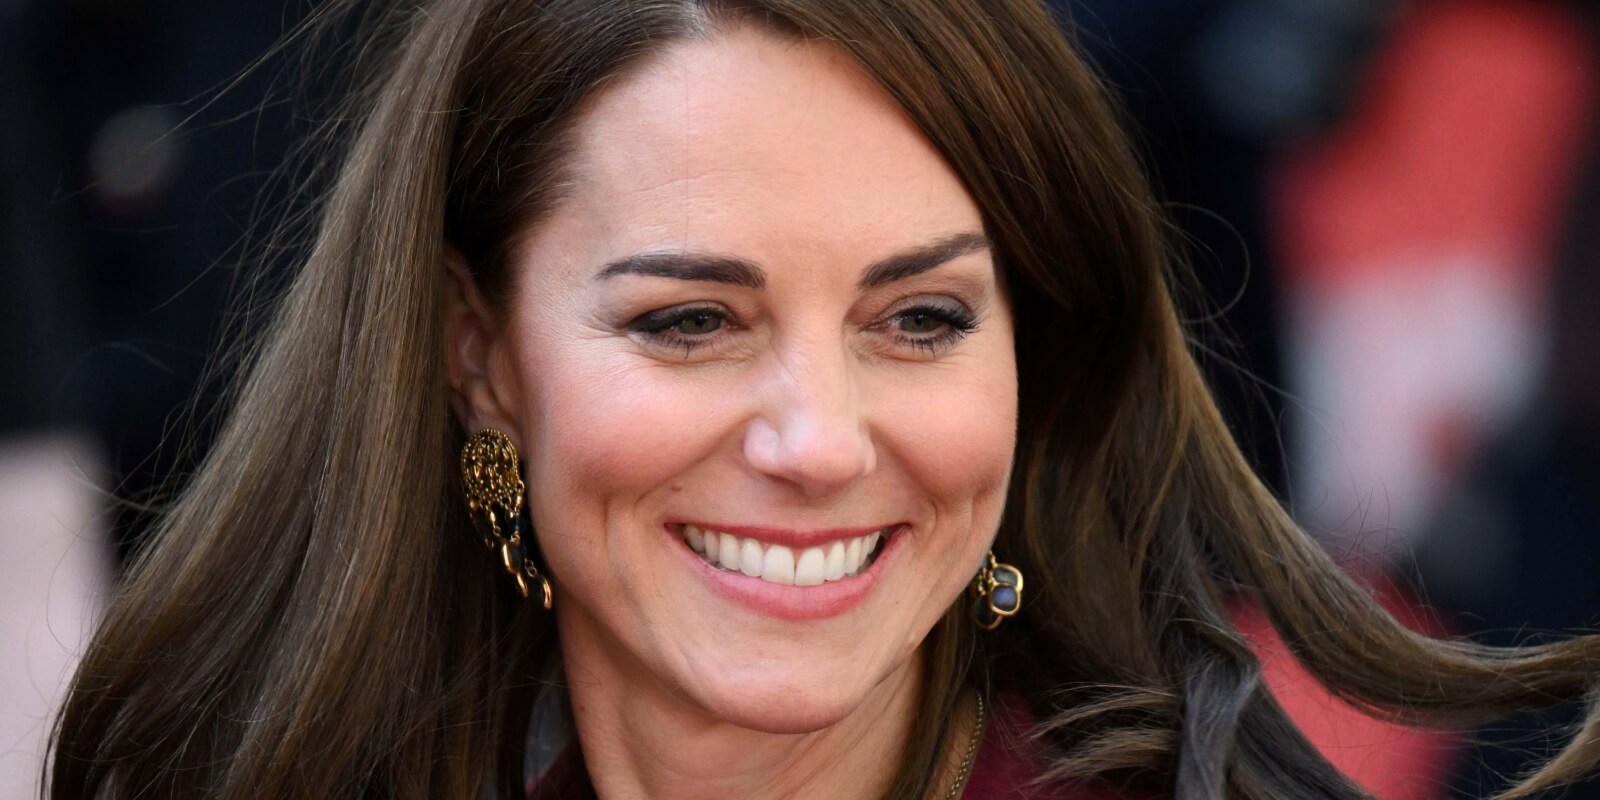 Kate Middleton smiles during a royal engagement in Birmingham, England in April 2023.